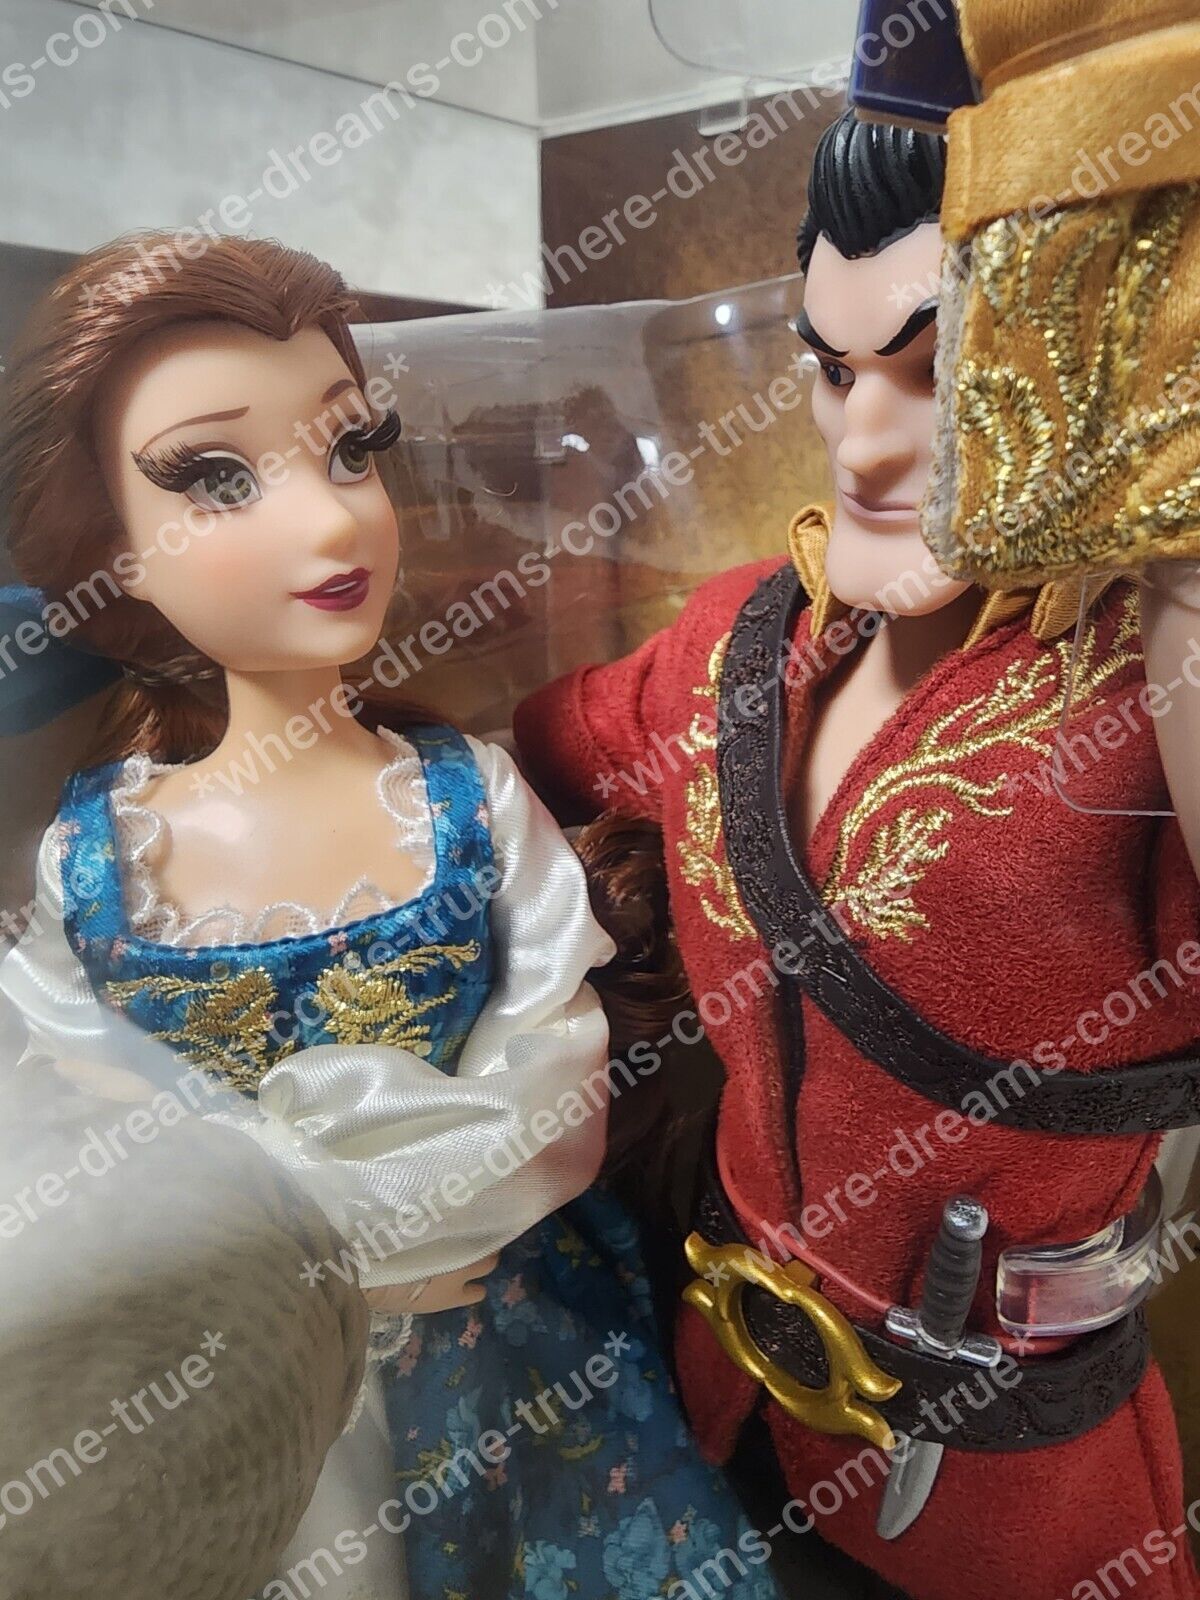 Disney Fairytale Designer Collection Doll Set - Belle and Gaston #363